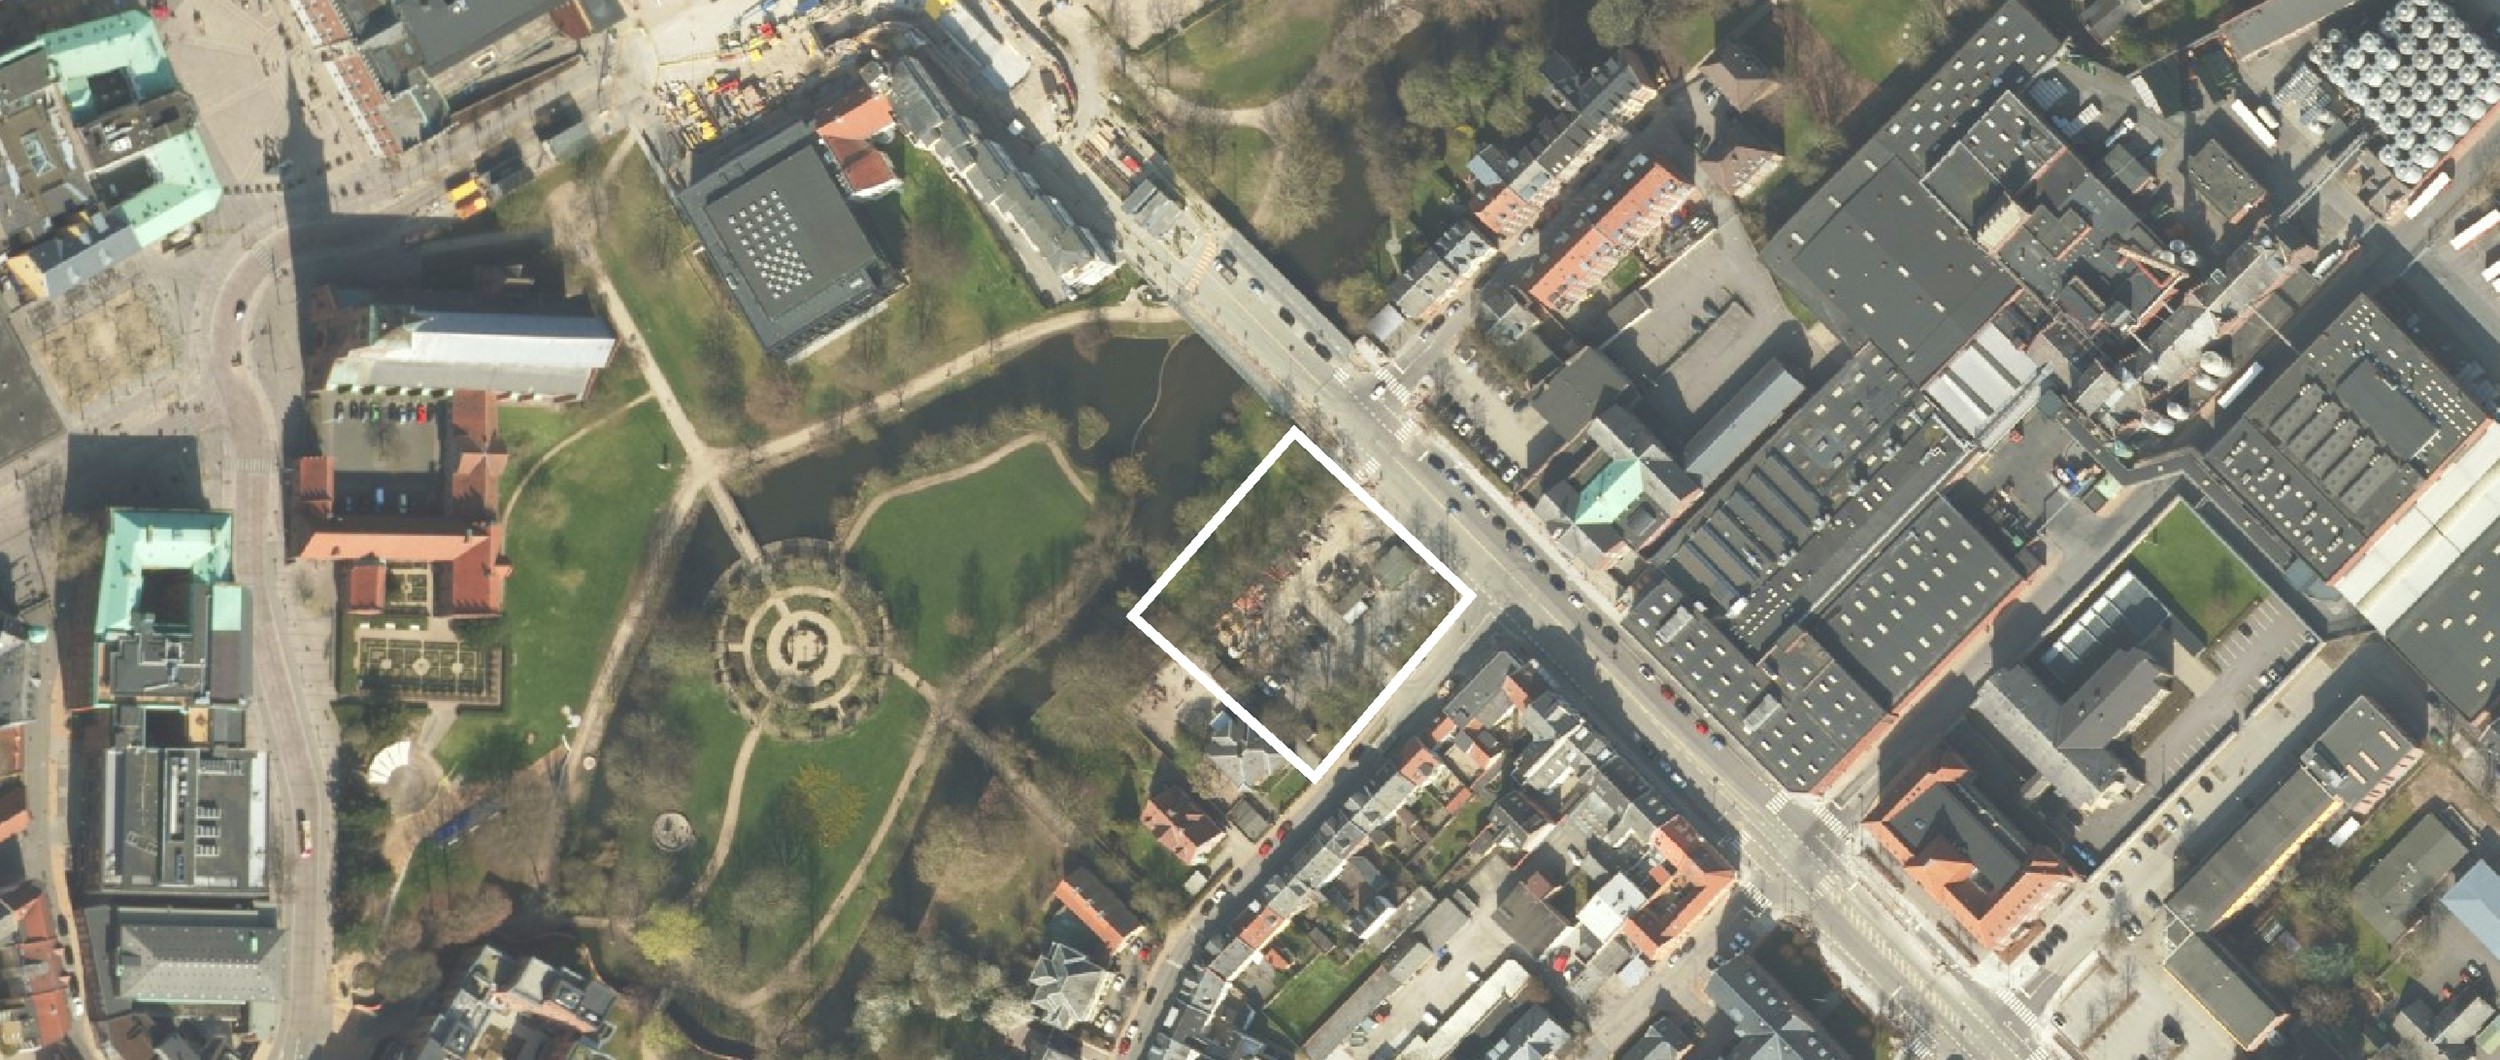 Bebyggelsen på Kronprinsensgade har en attraktiv beliggenhed ved Odense Å, en Å der står som et stærkt motiv for byen.